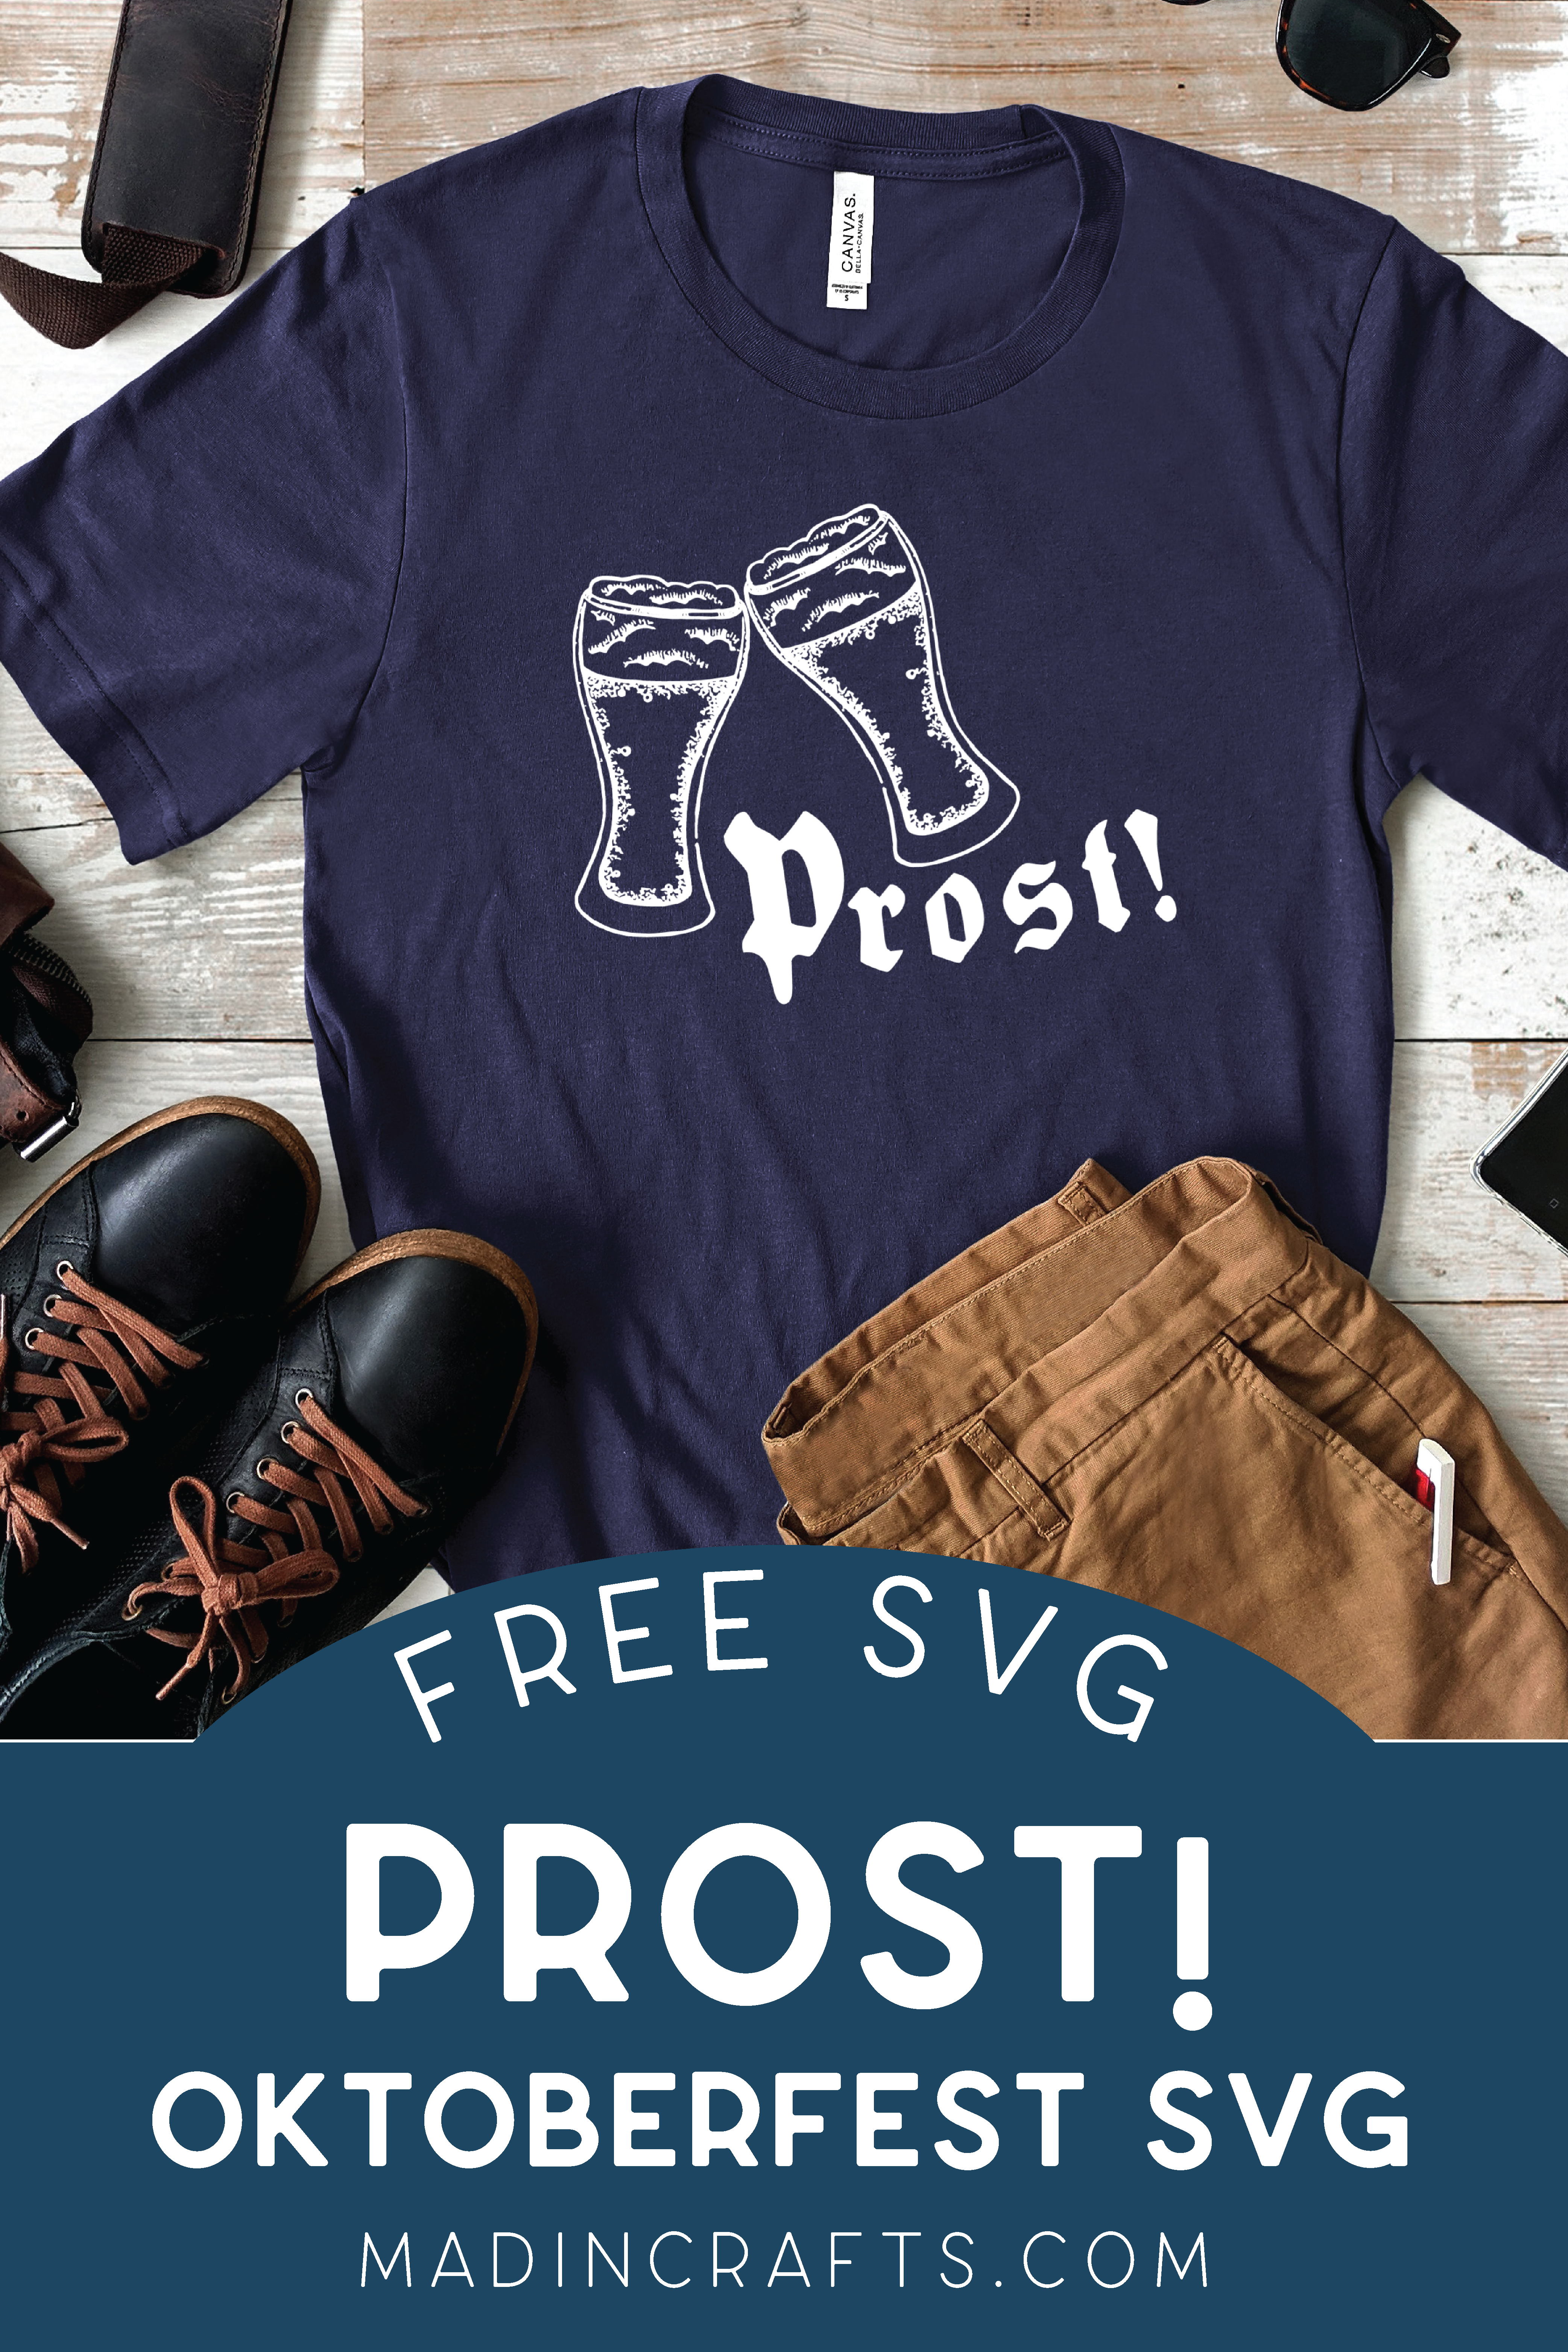 Prost SVG design in vinyl on a blue men's t-shirt